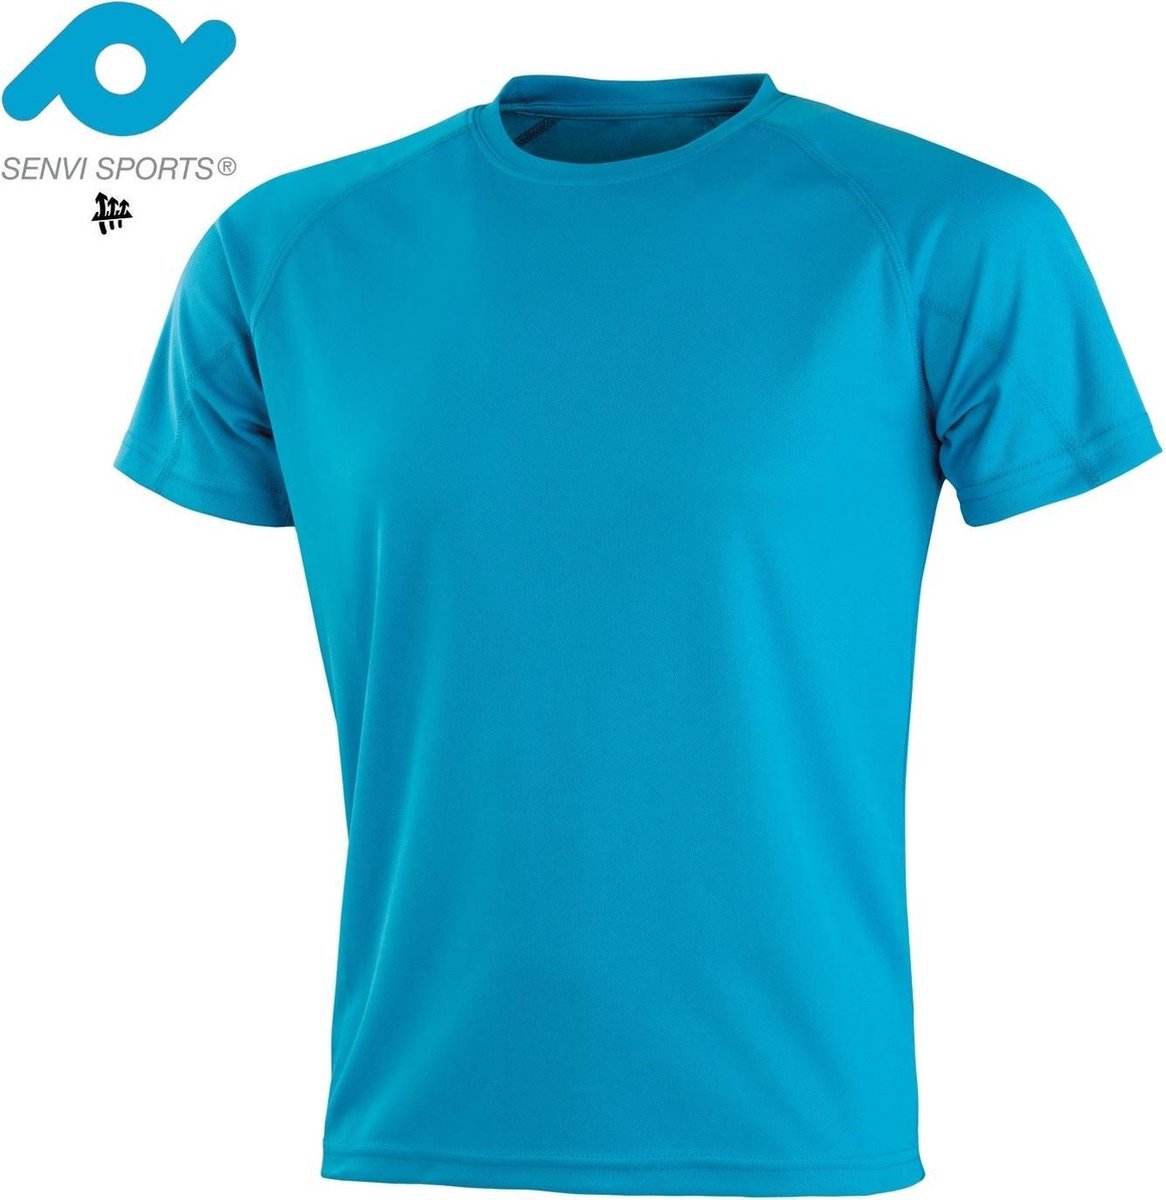 Senvi Sports Performance T-Shirt- Turquoise - XXS - Unisex